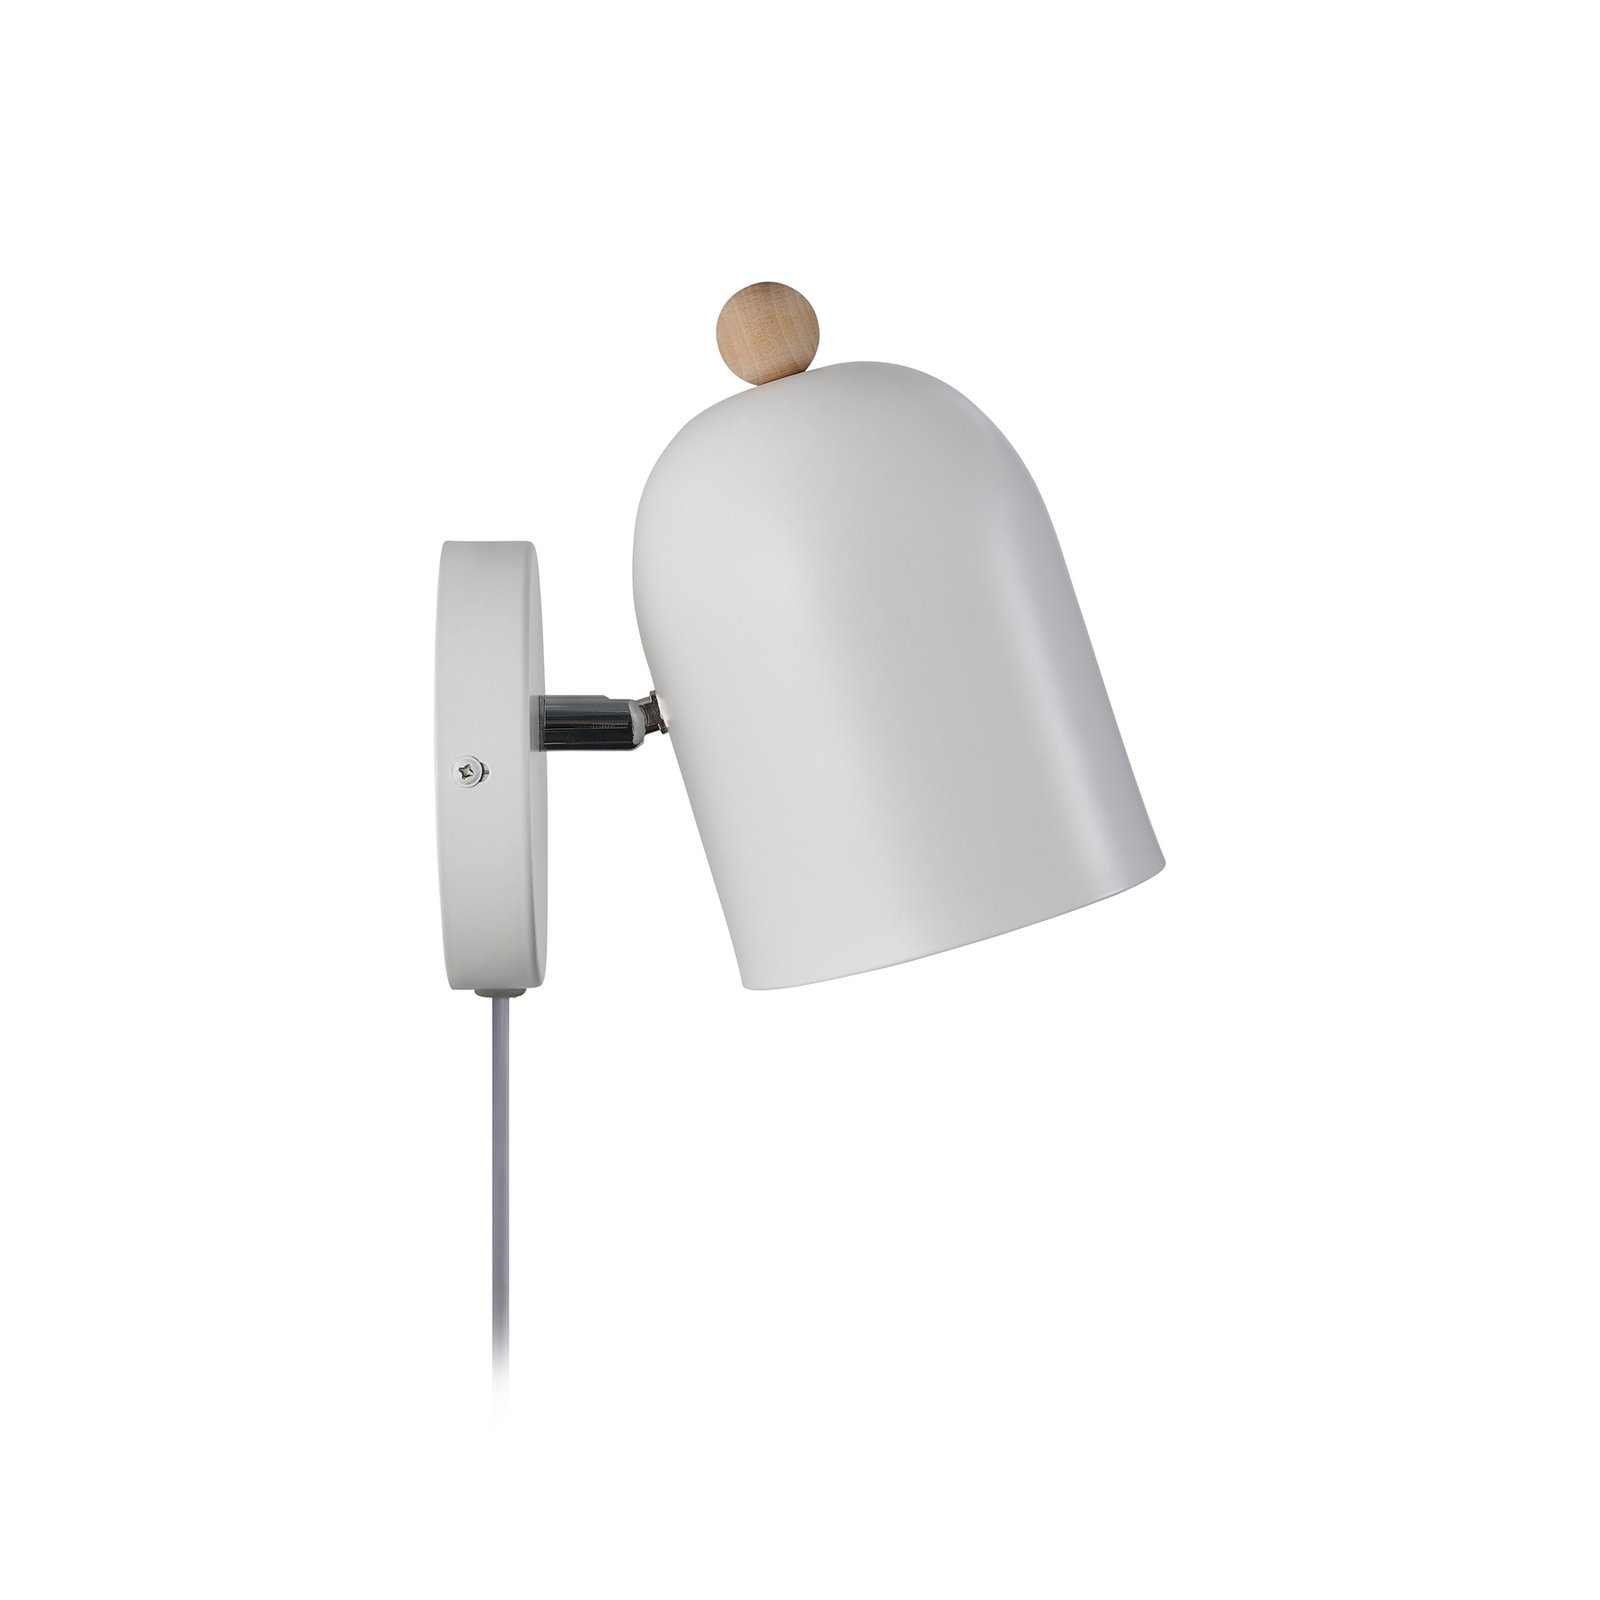 Gaston wall light with cable and plug, metal, white